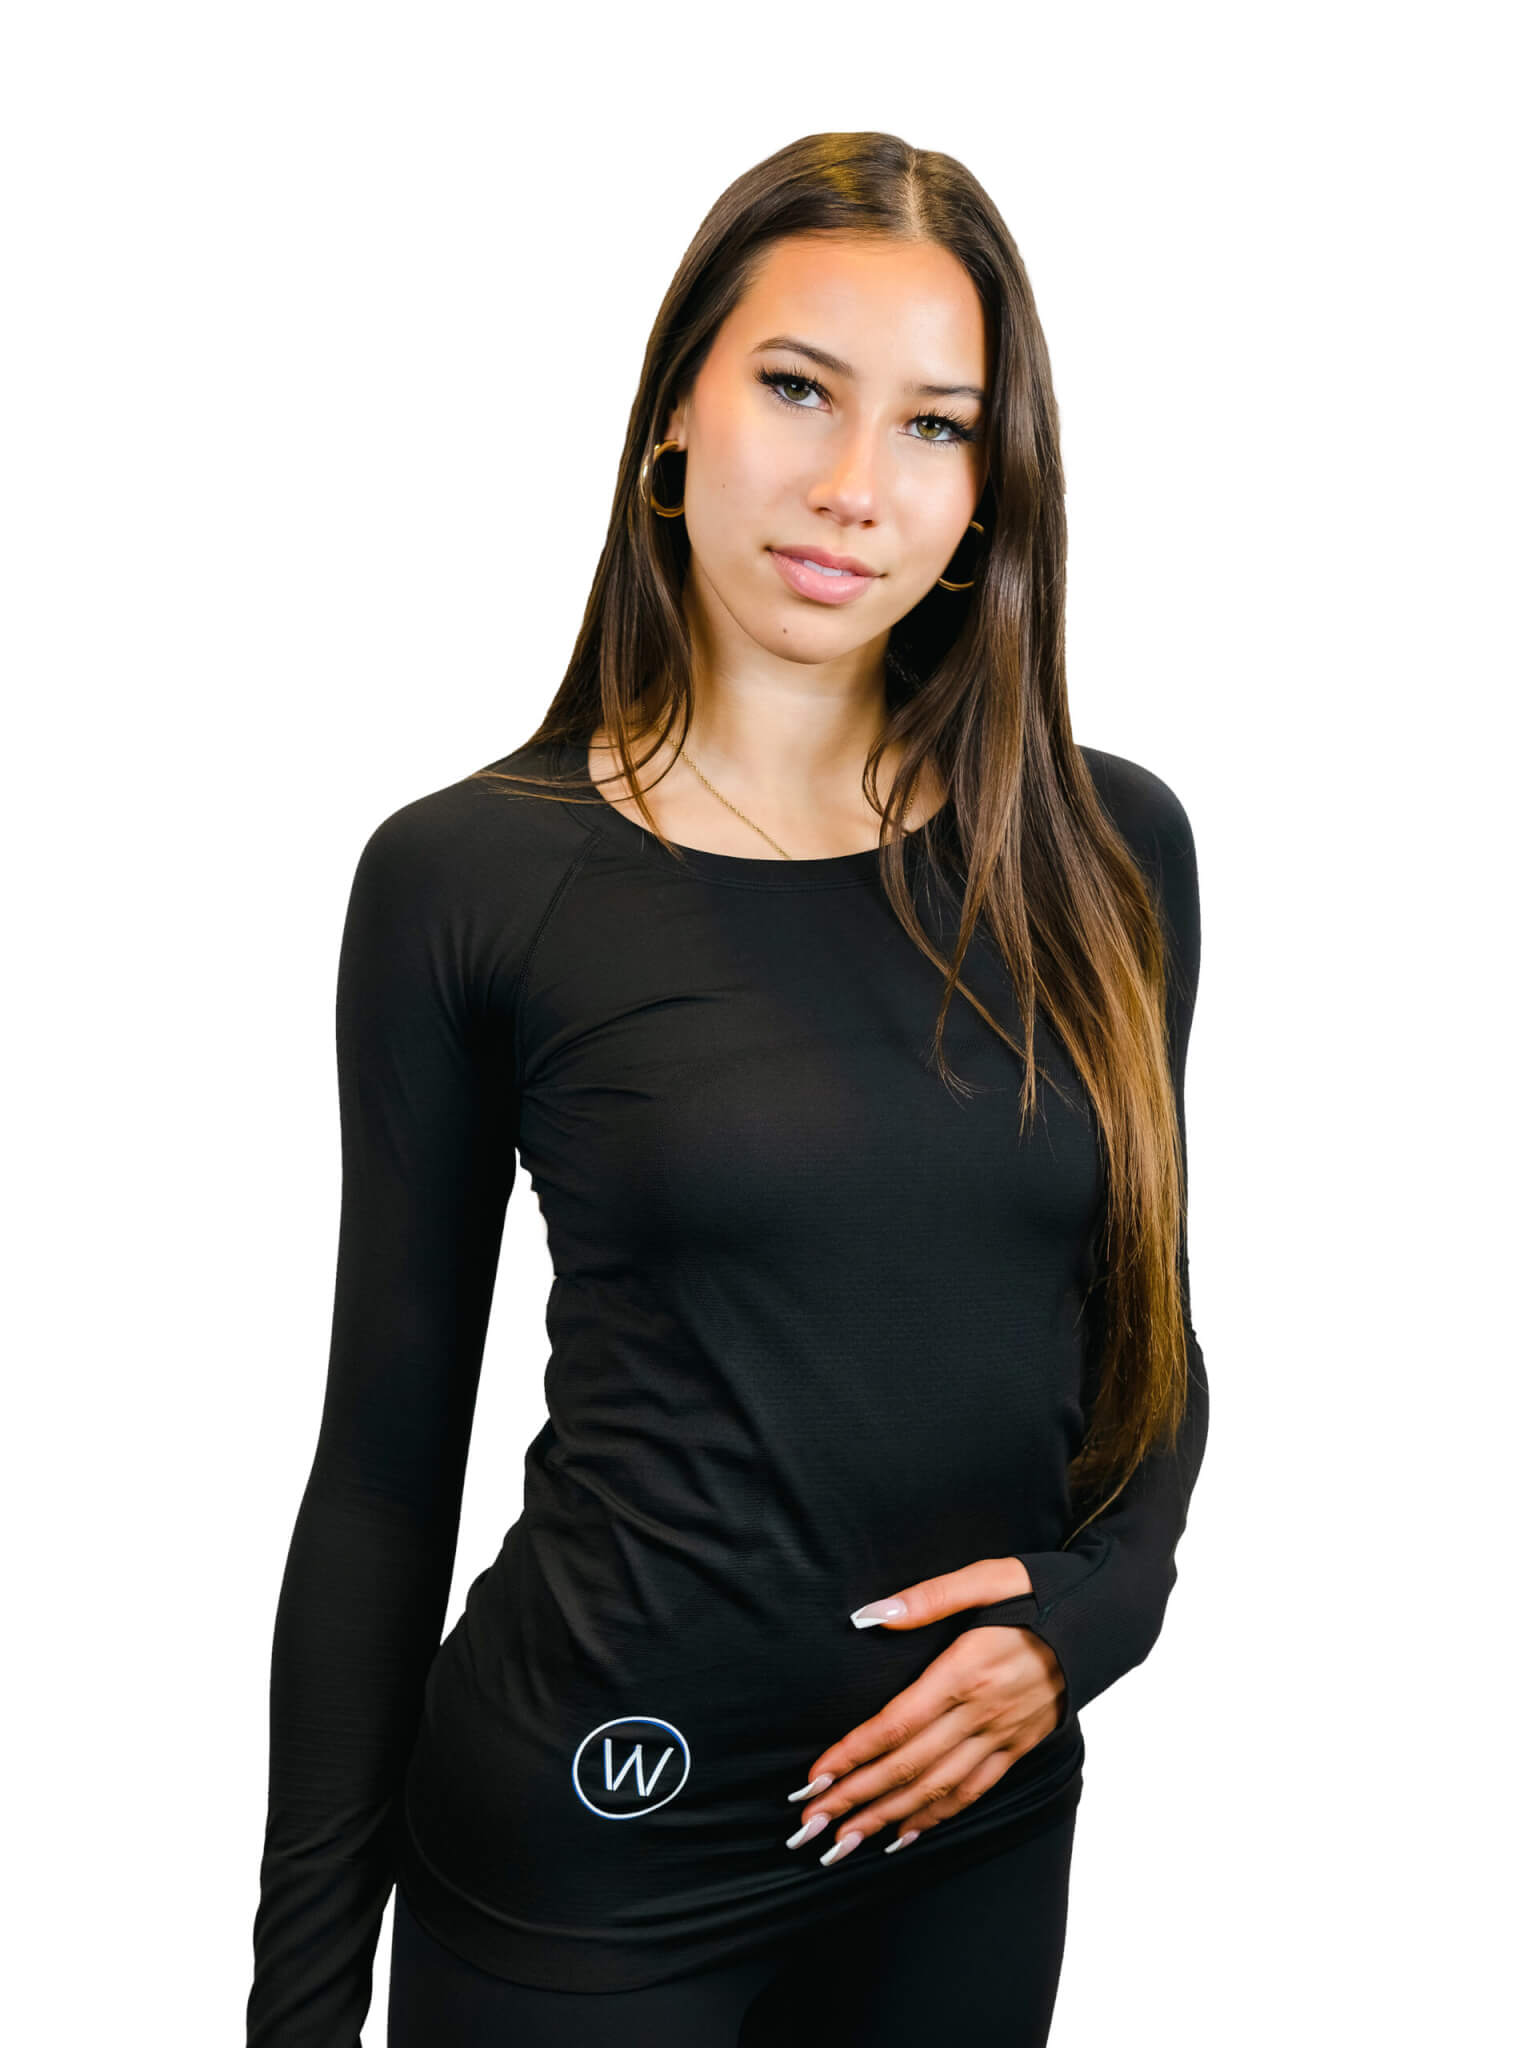 Lululemon athletica Swiftly Tech Long-Sleeve Shirt 2.0, Women's Long  Sleeve Shirts